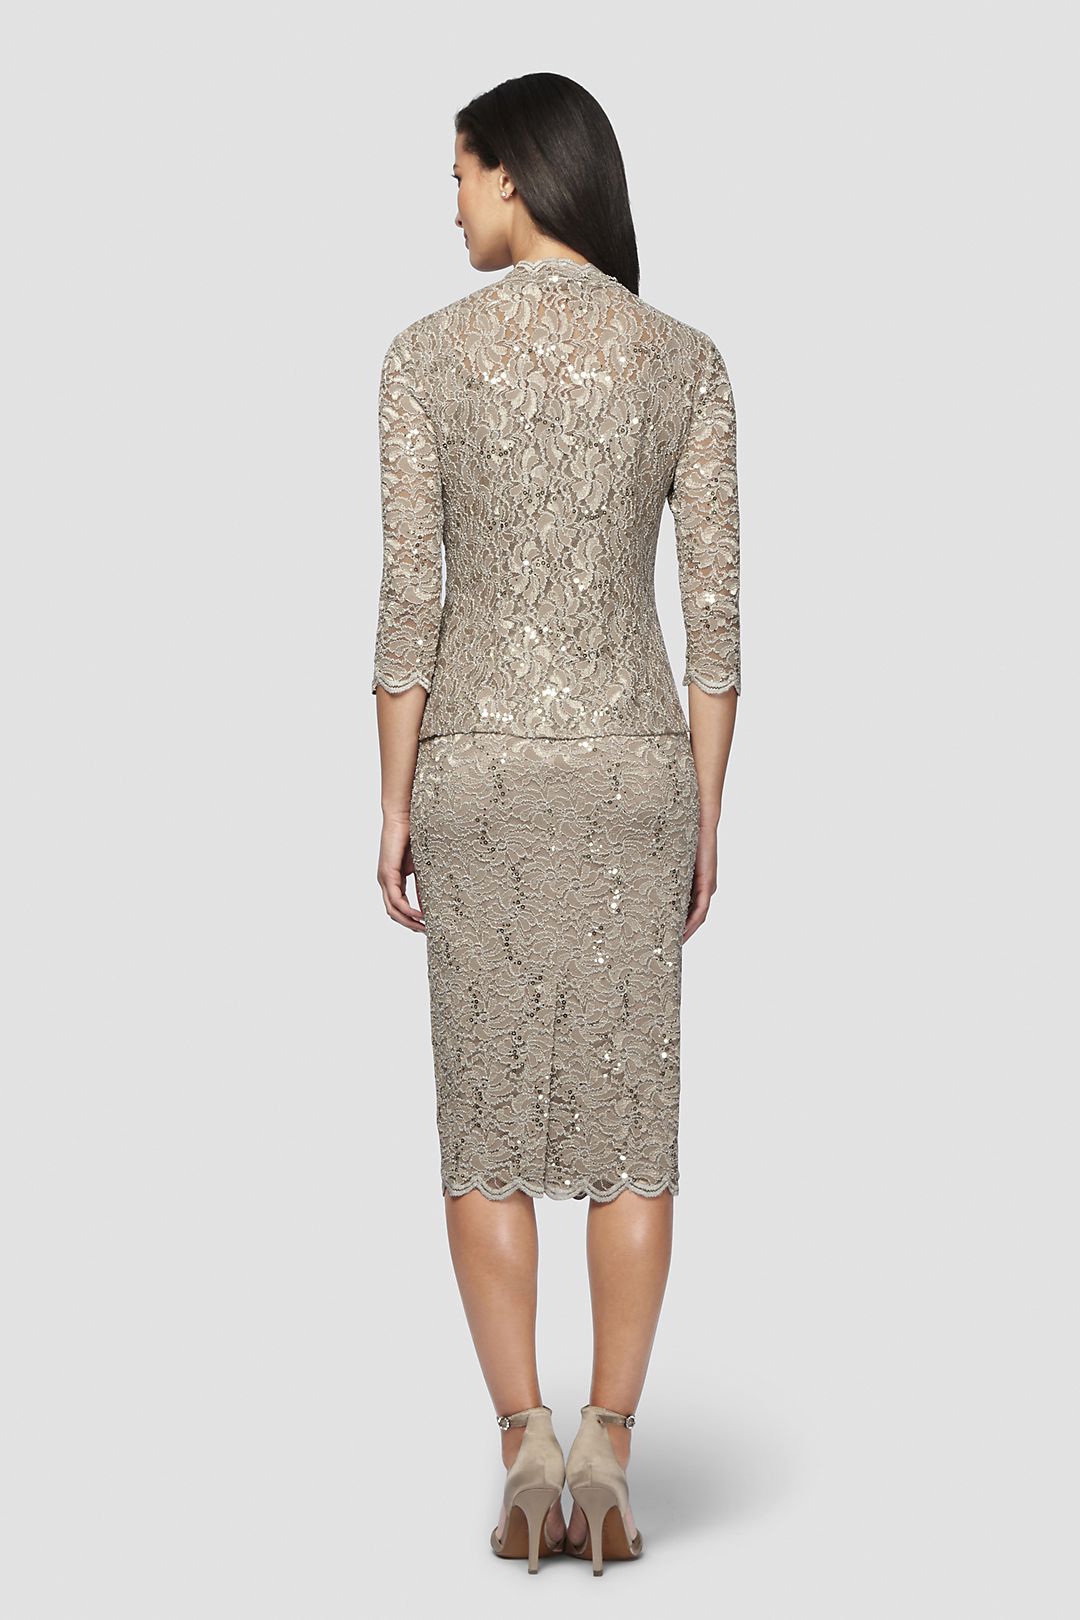 Sequin Lace Petite Tea-Length Dress and Jacket | David's Bridal